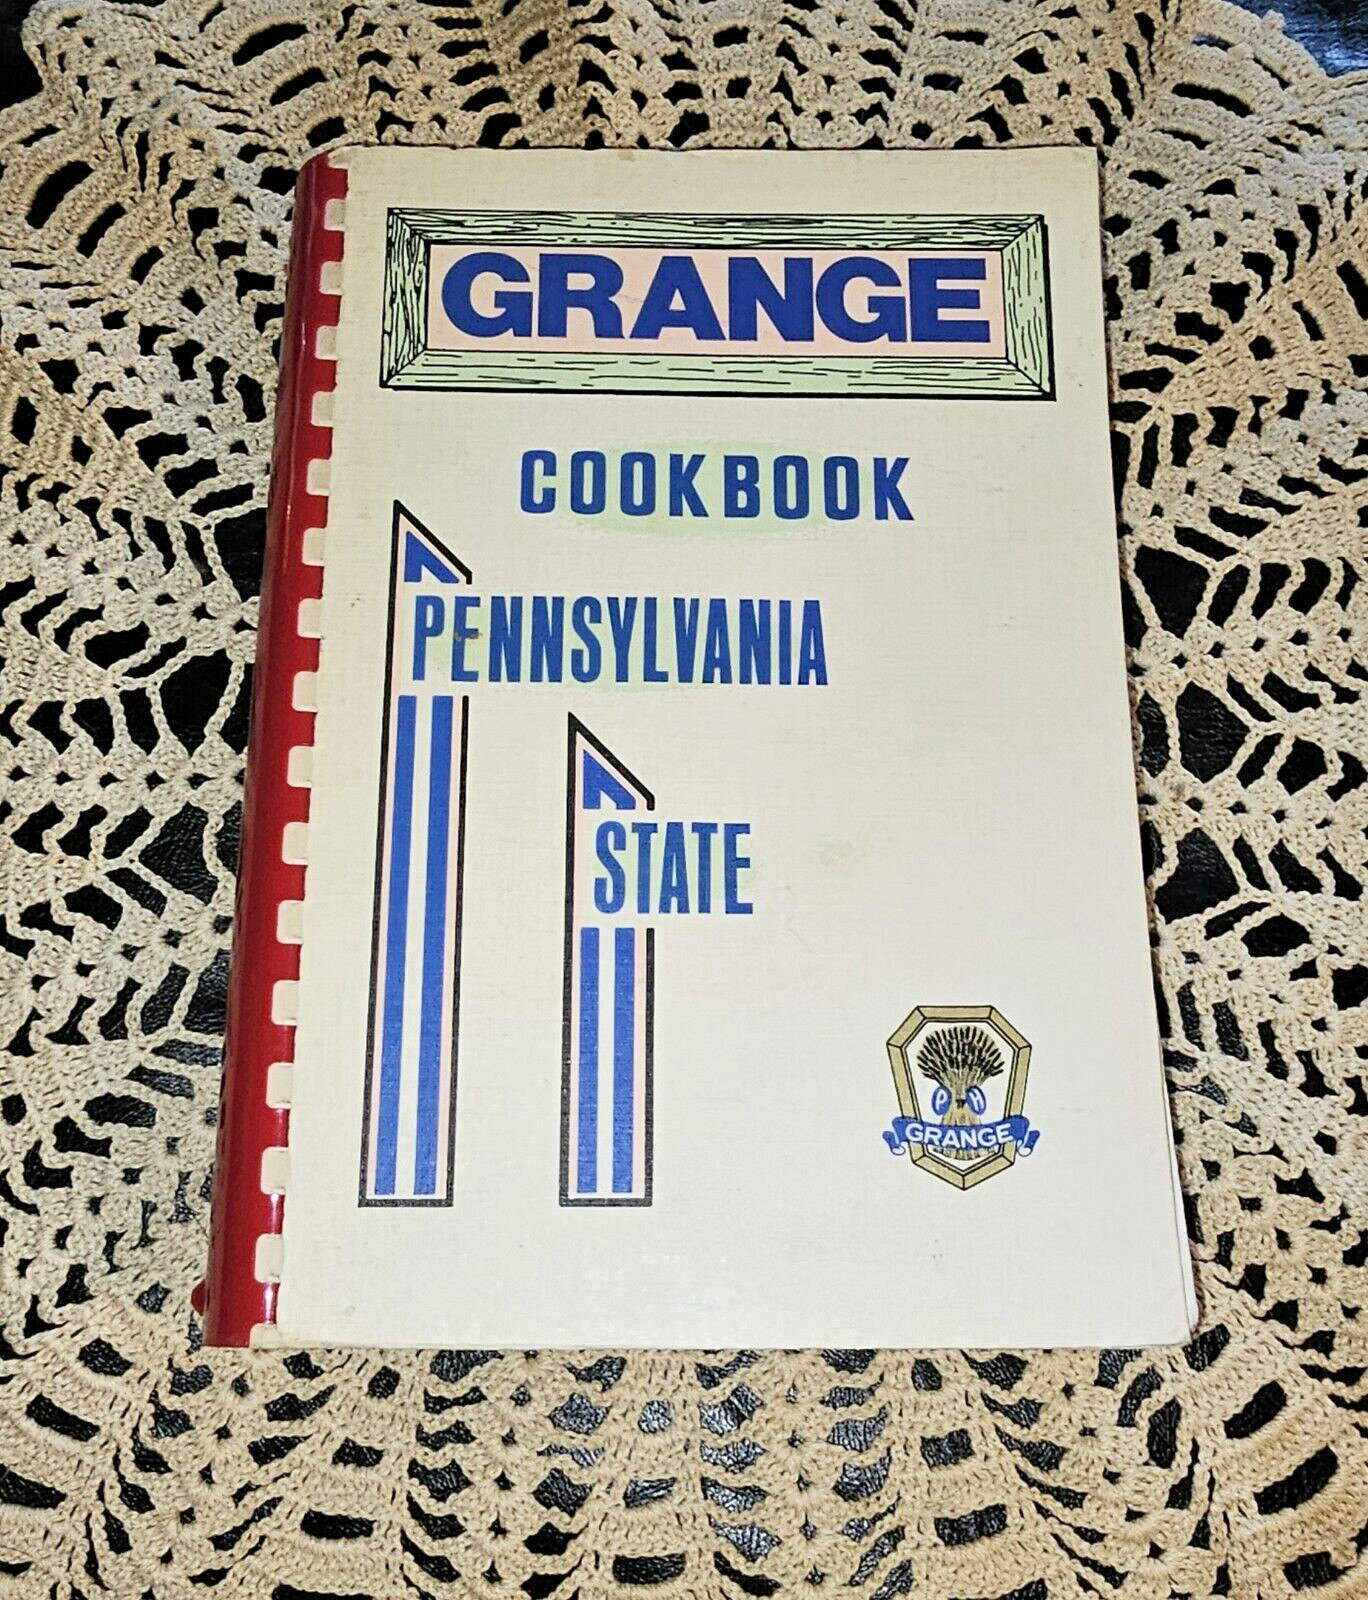 1977 Pensylvania State Grange Cookbook -
                        Over 1500 Recipes (Very Nice!)